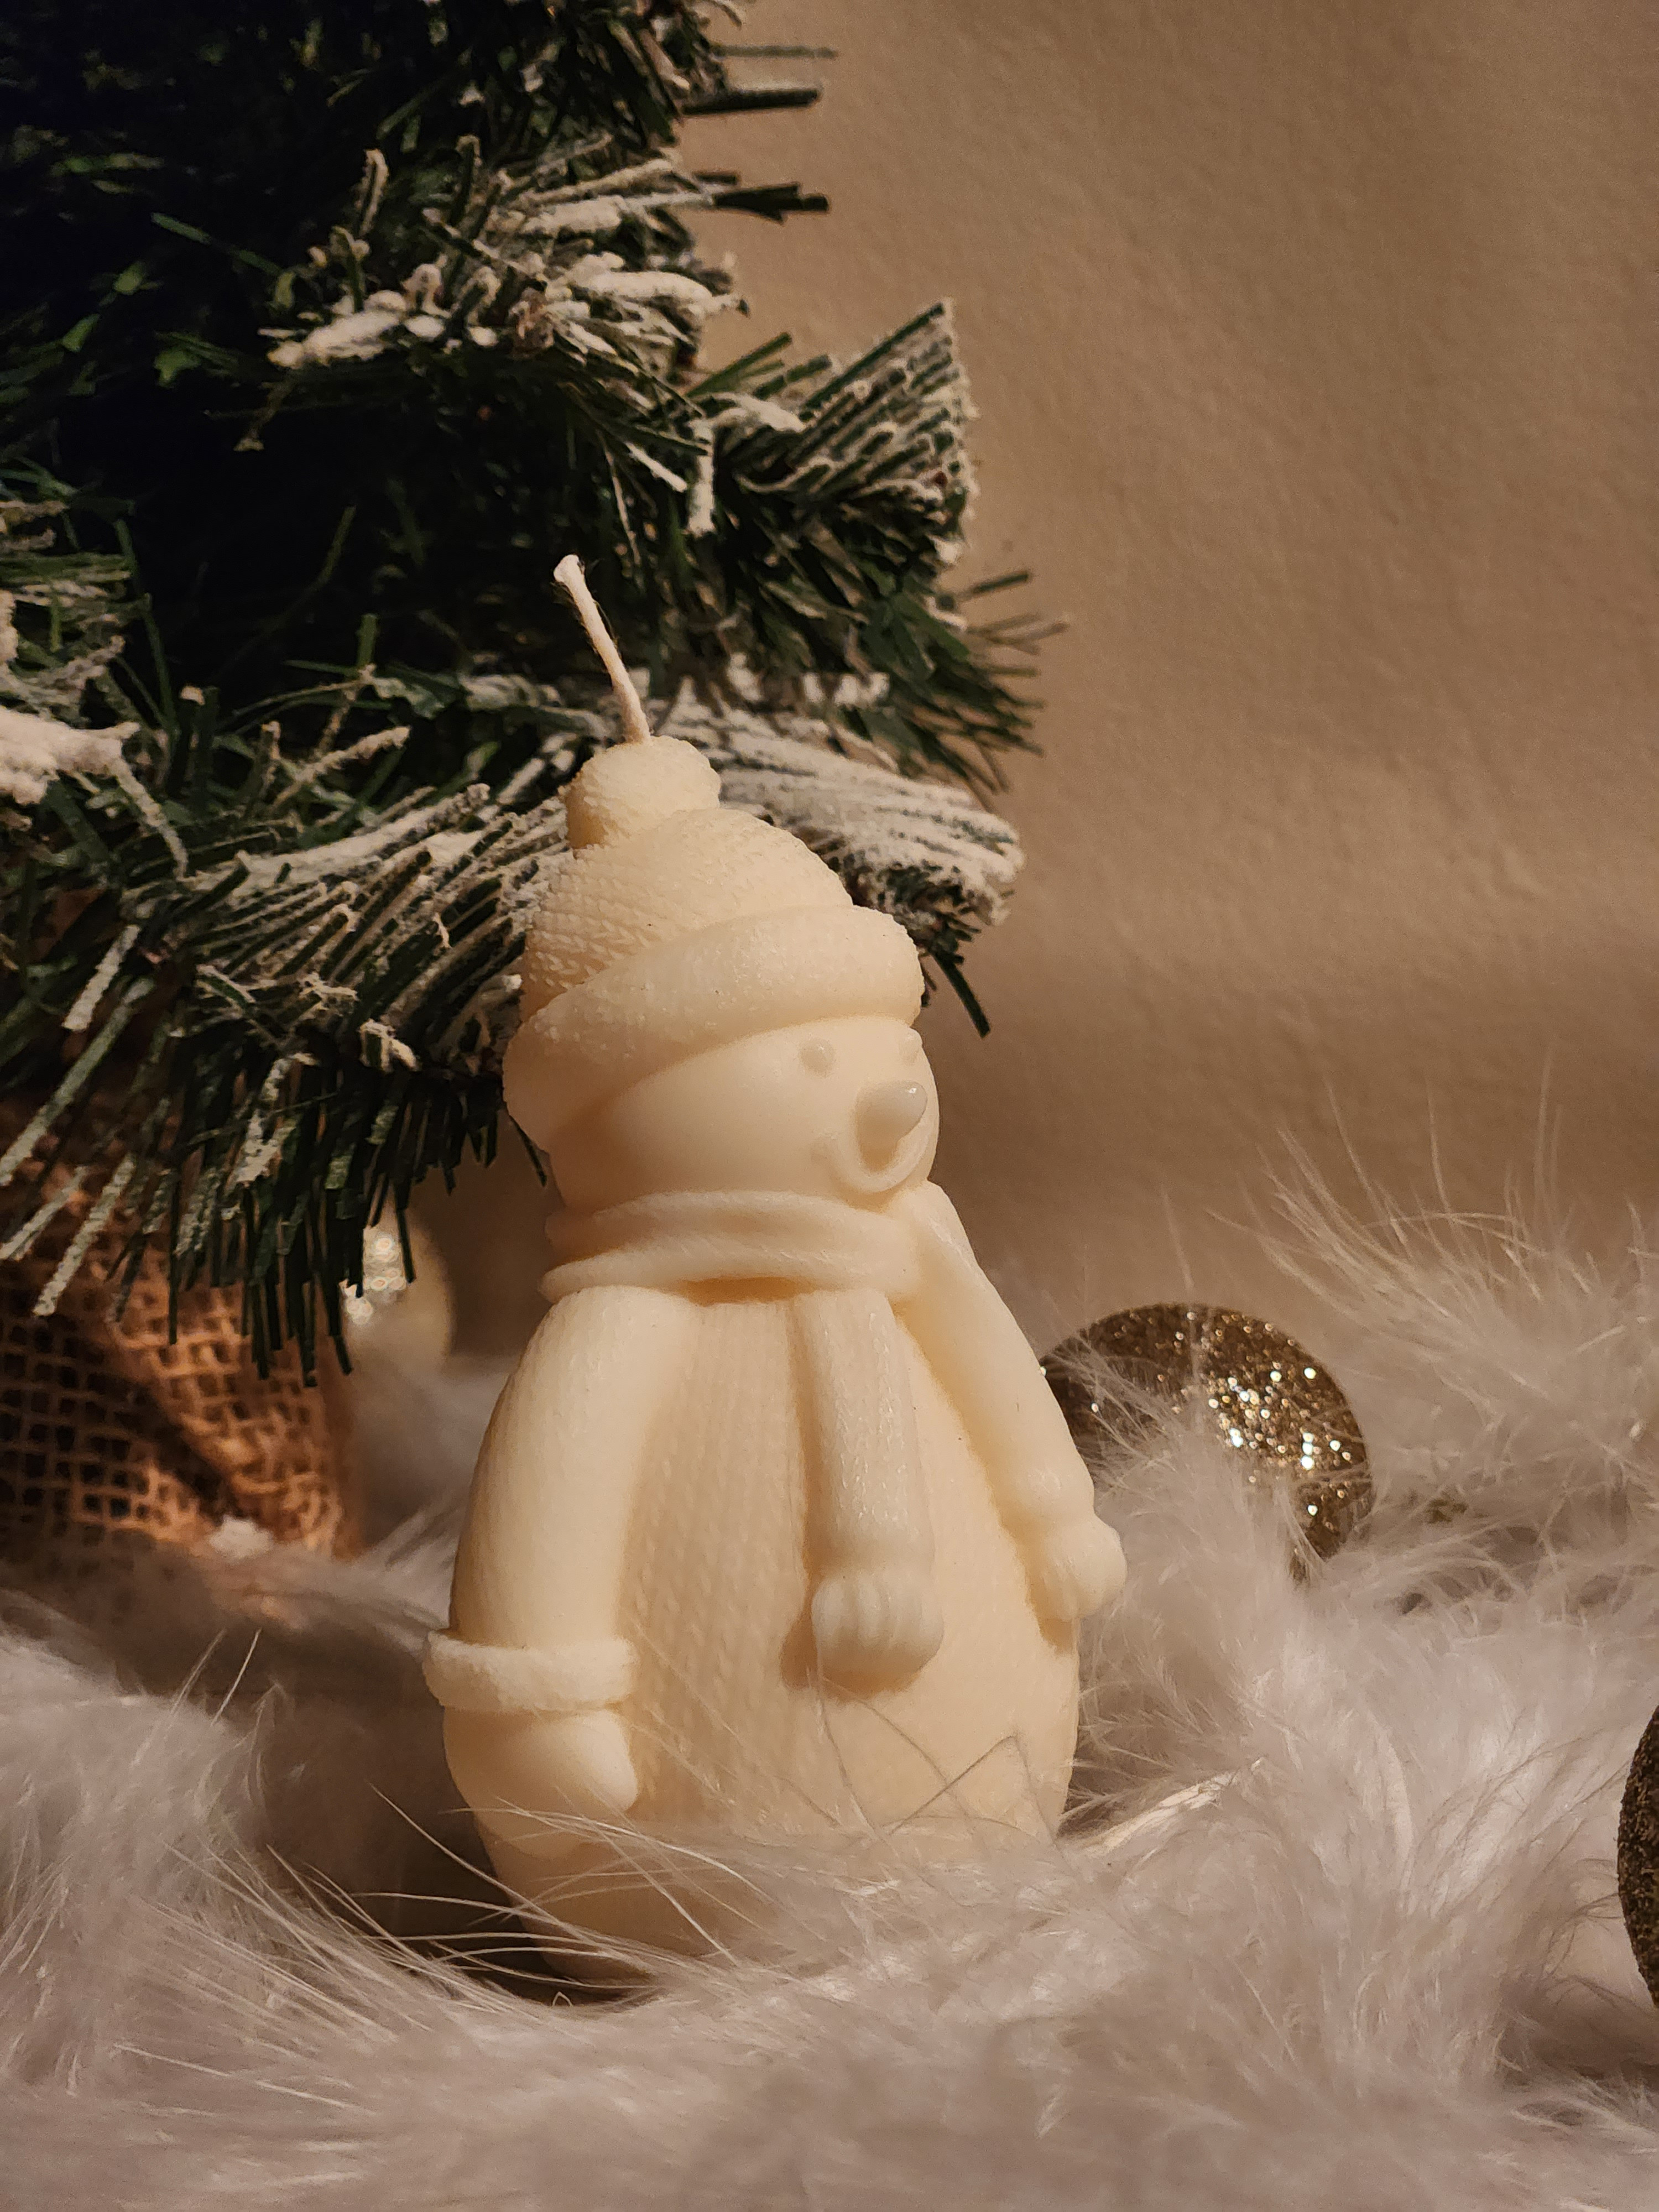 Snowman Candle スノーマン 雪だるま キャンドル キャンドル